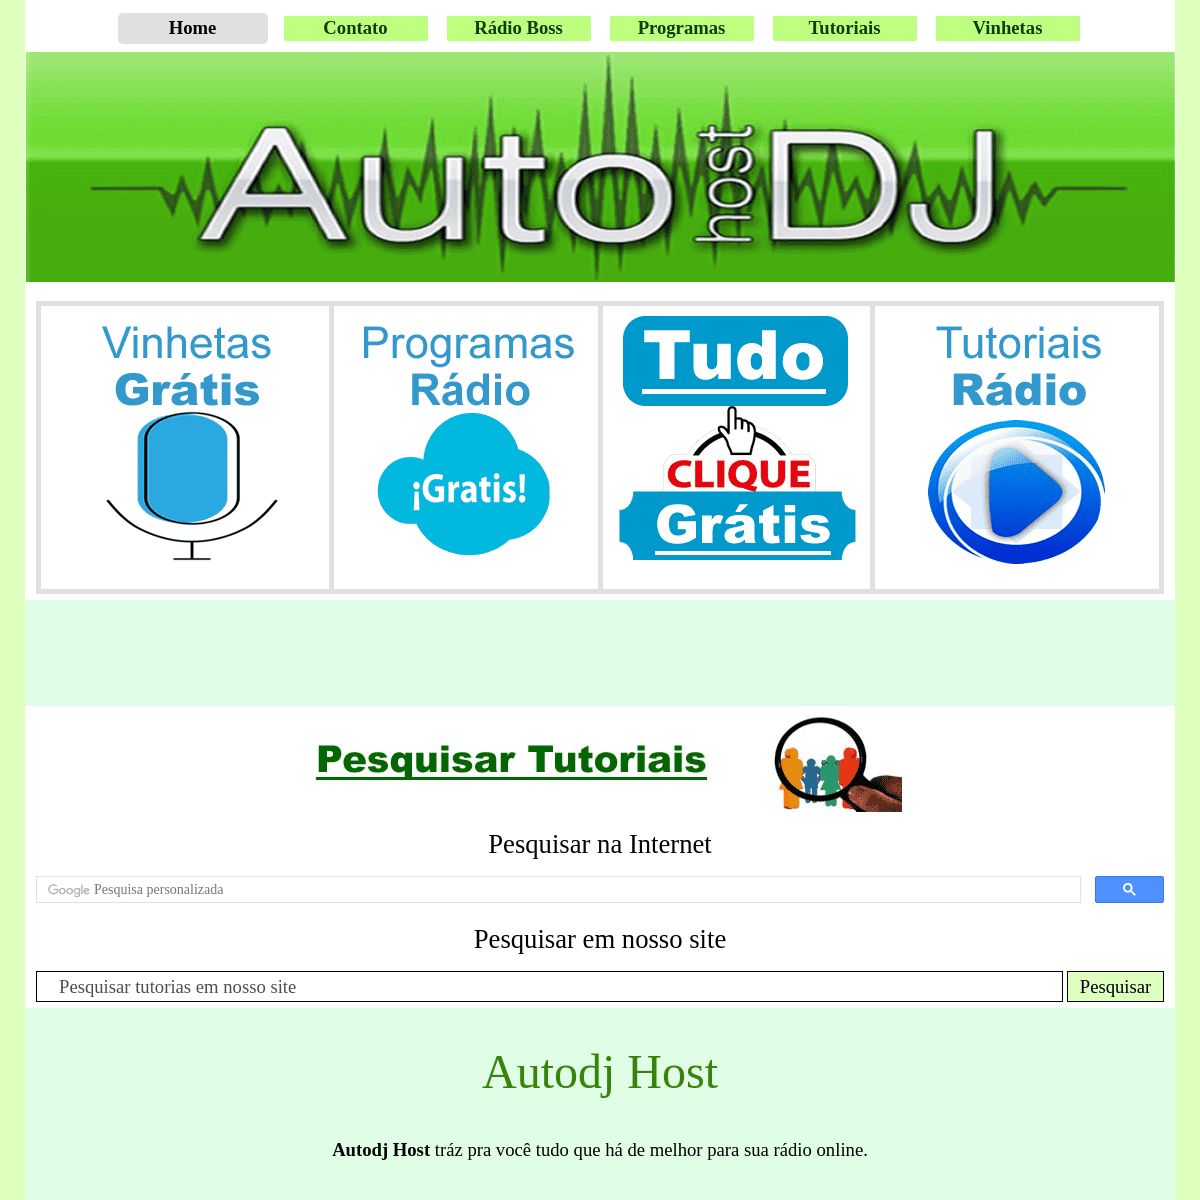 A complete backup of autodjhost.com